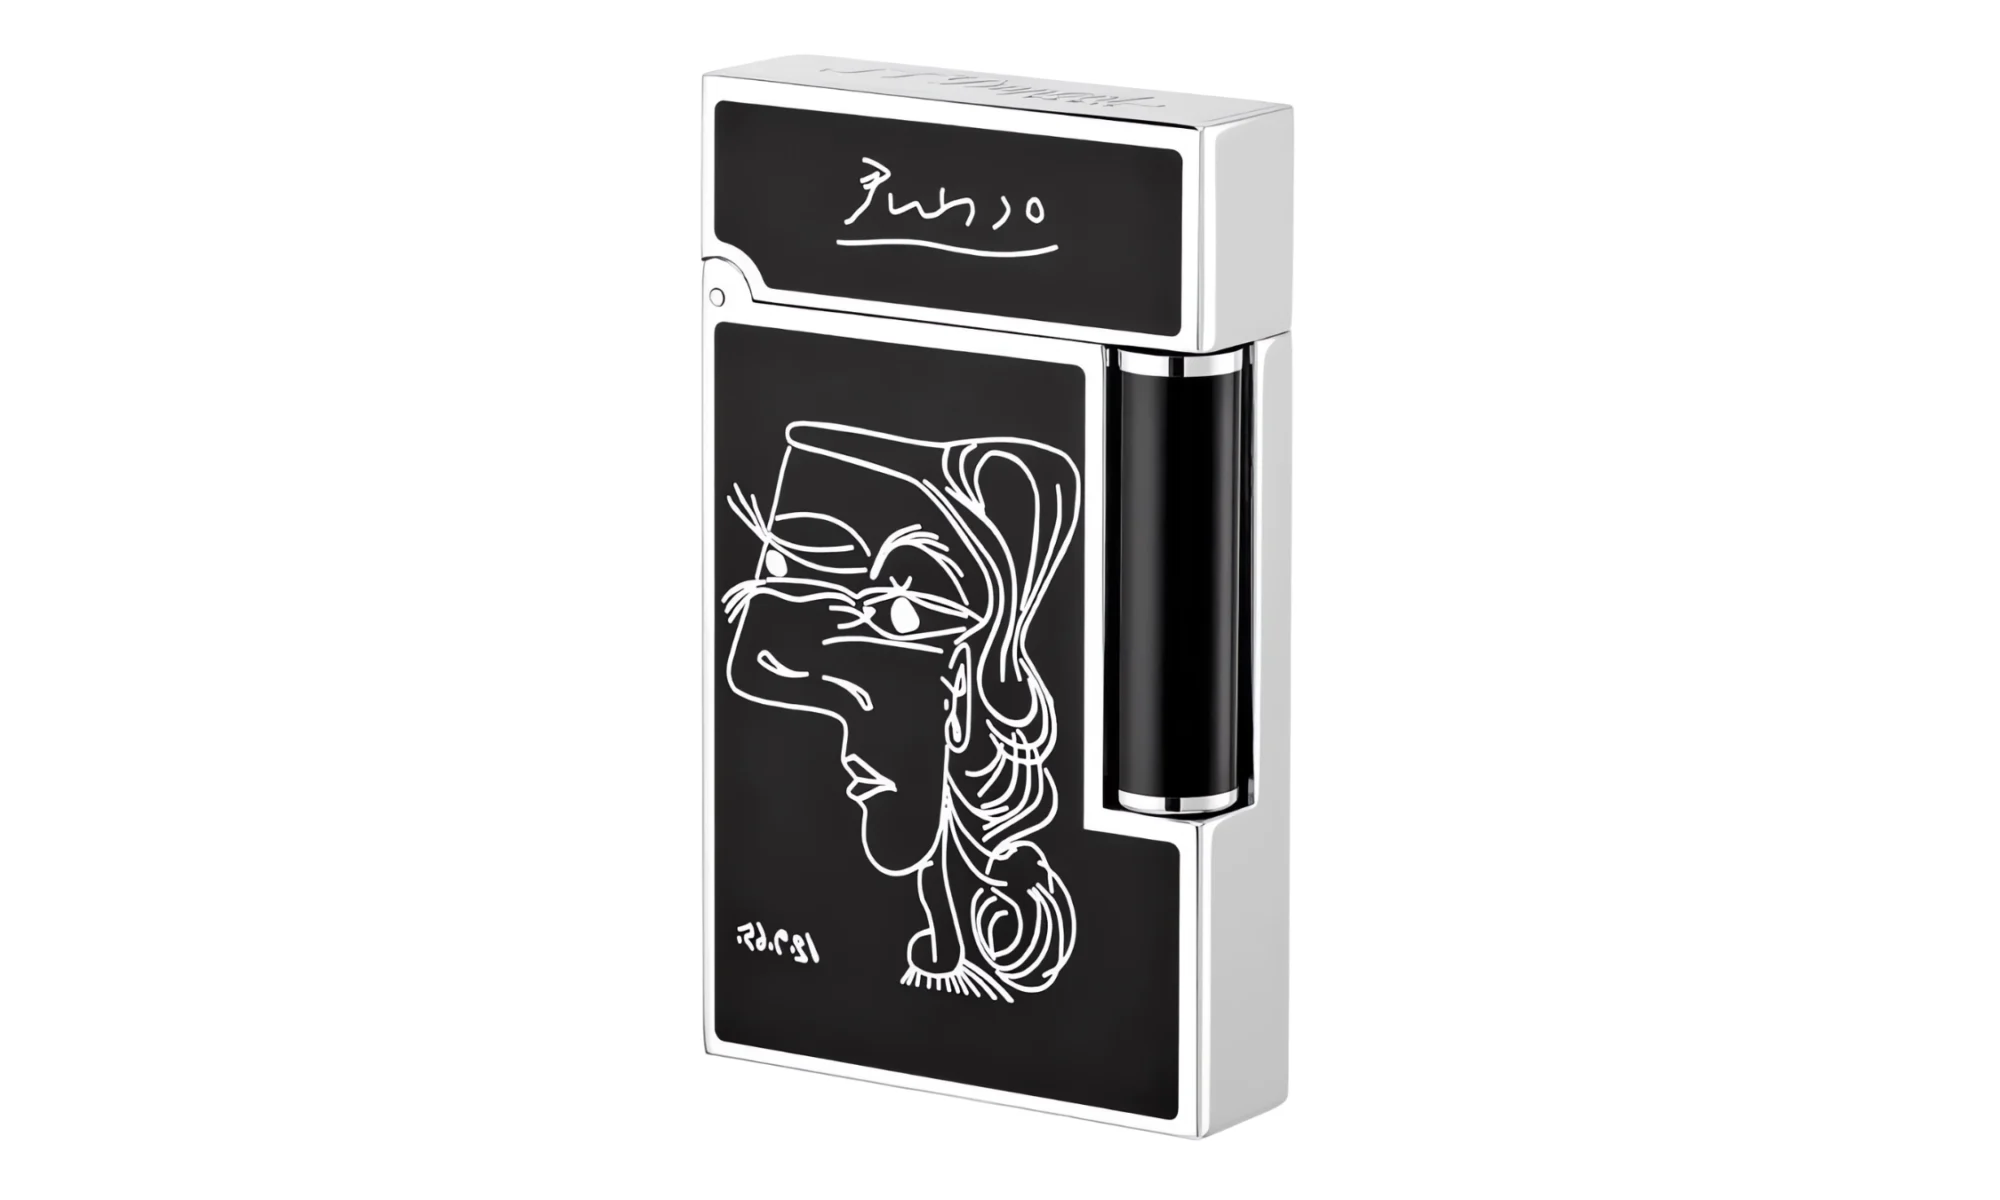 S.T Dupont Ligne 2 Picasso Limited Edition Lighter